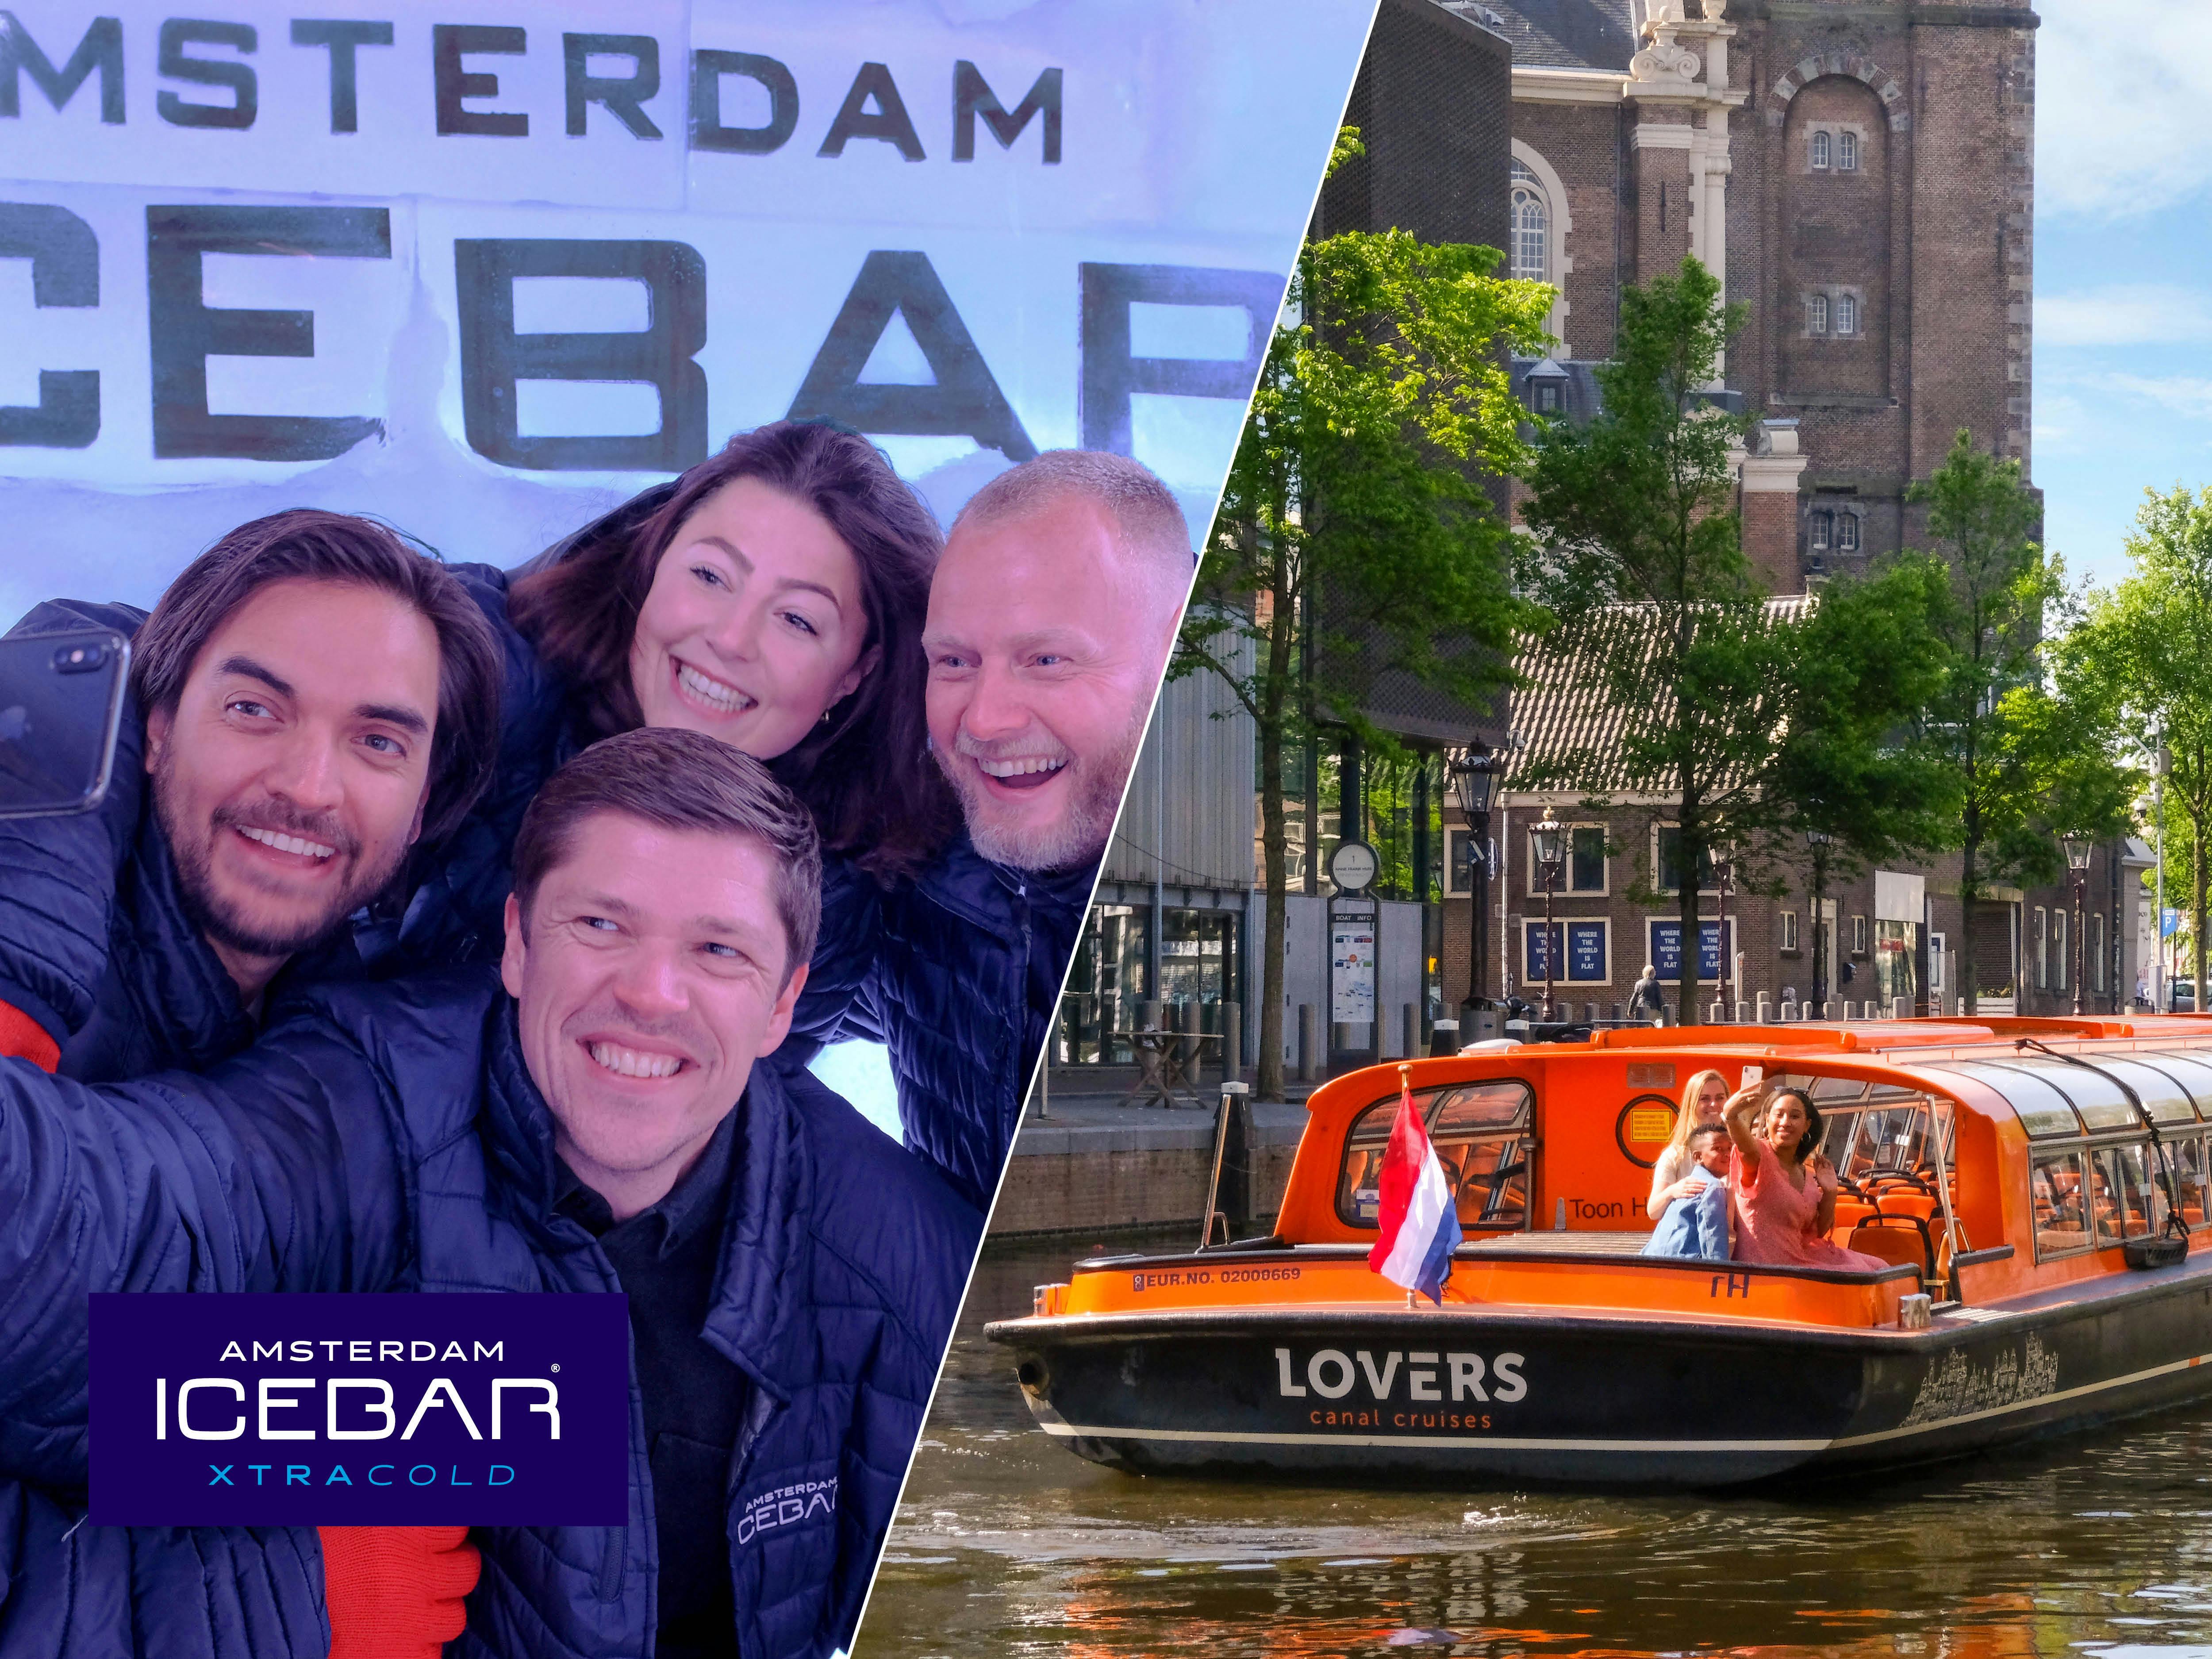 Bilhete de entrada para o Amsterdam XtraCold Icebar e cruzeiro de 1 hora pelos canais